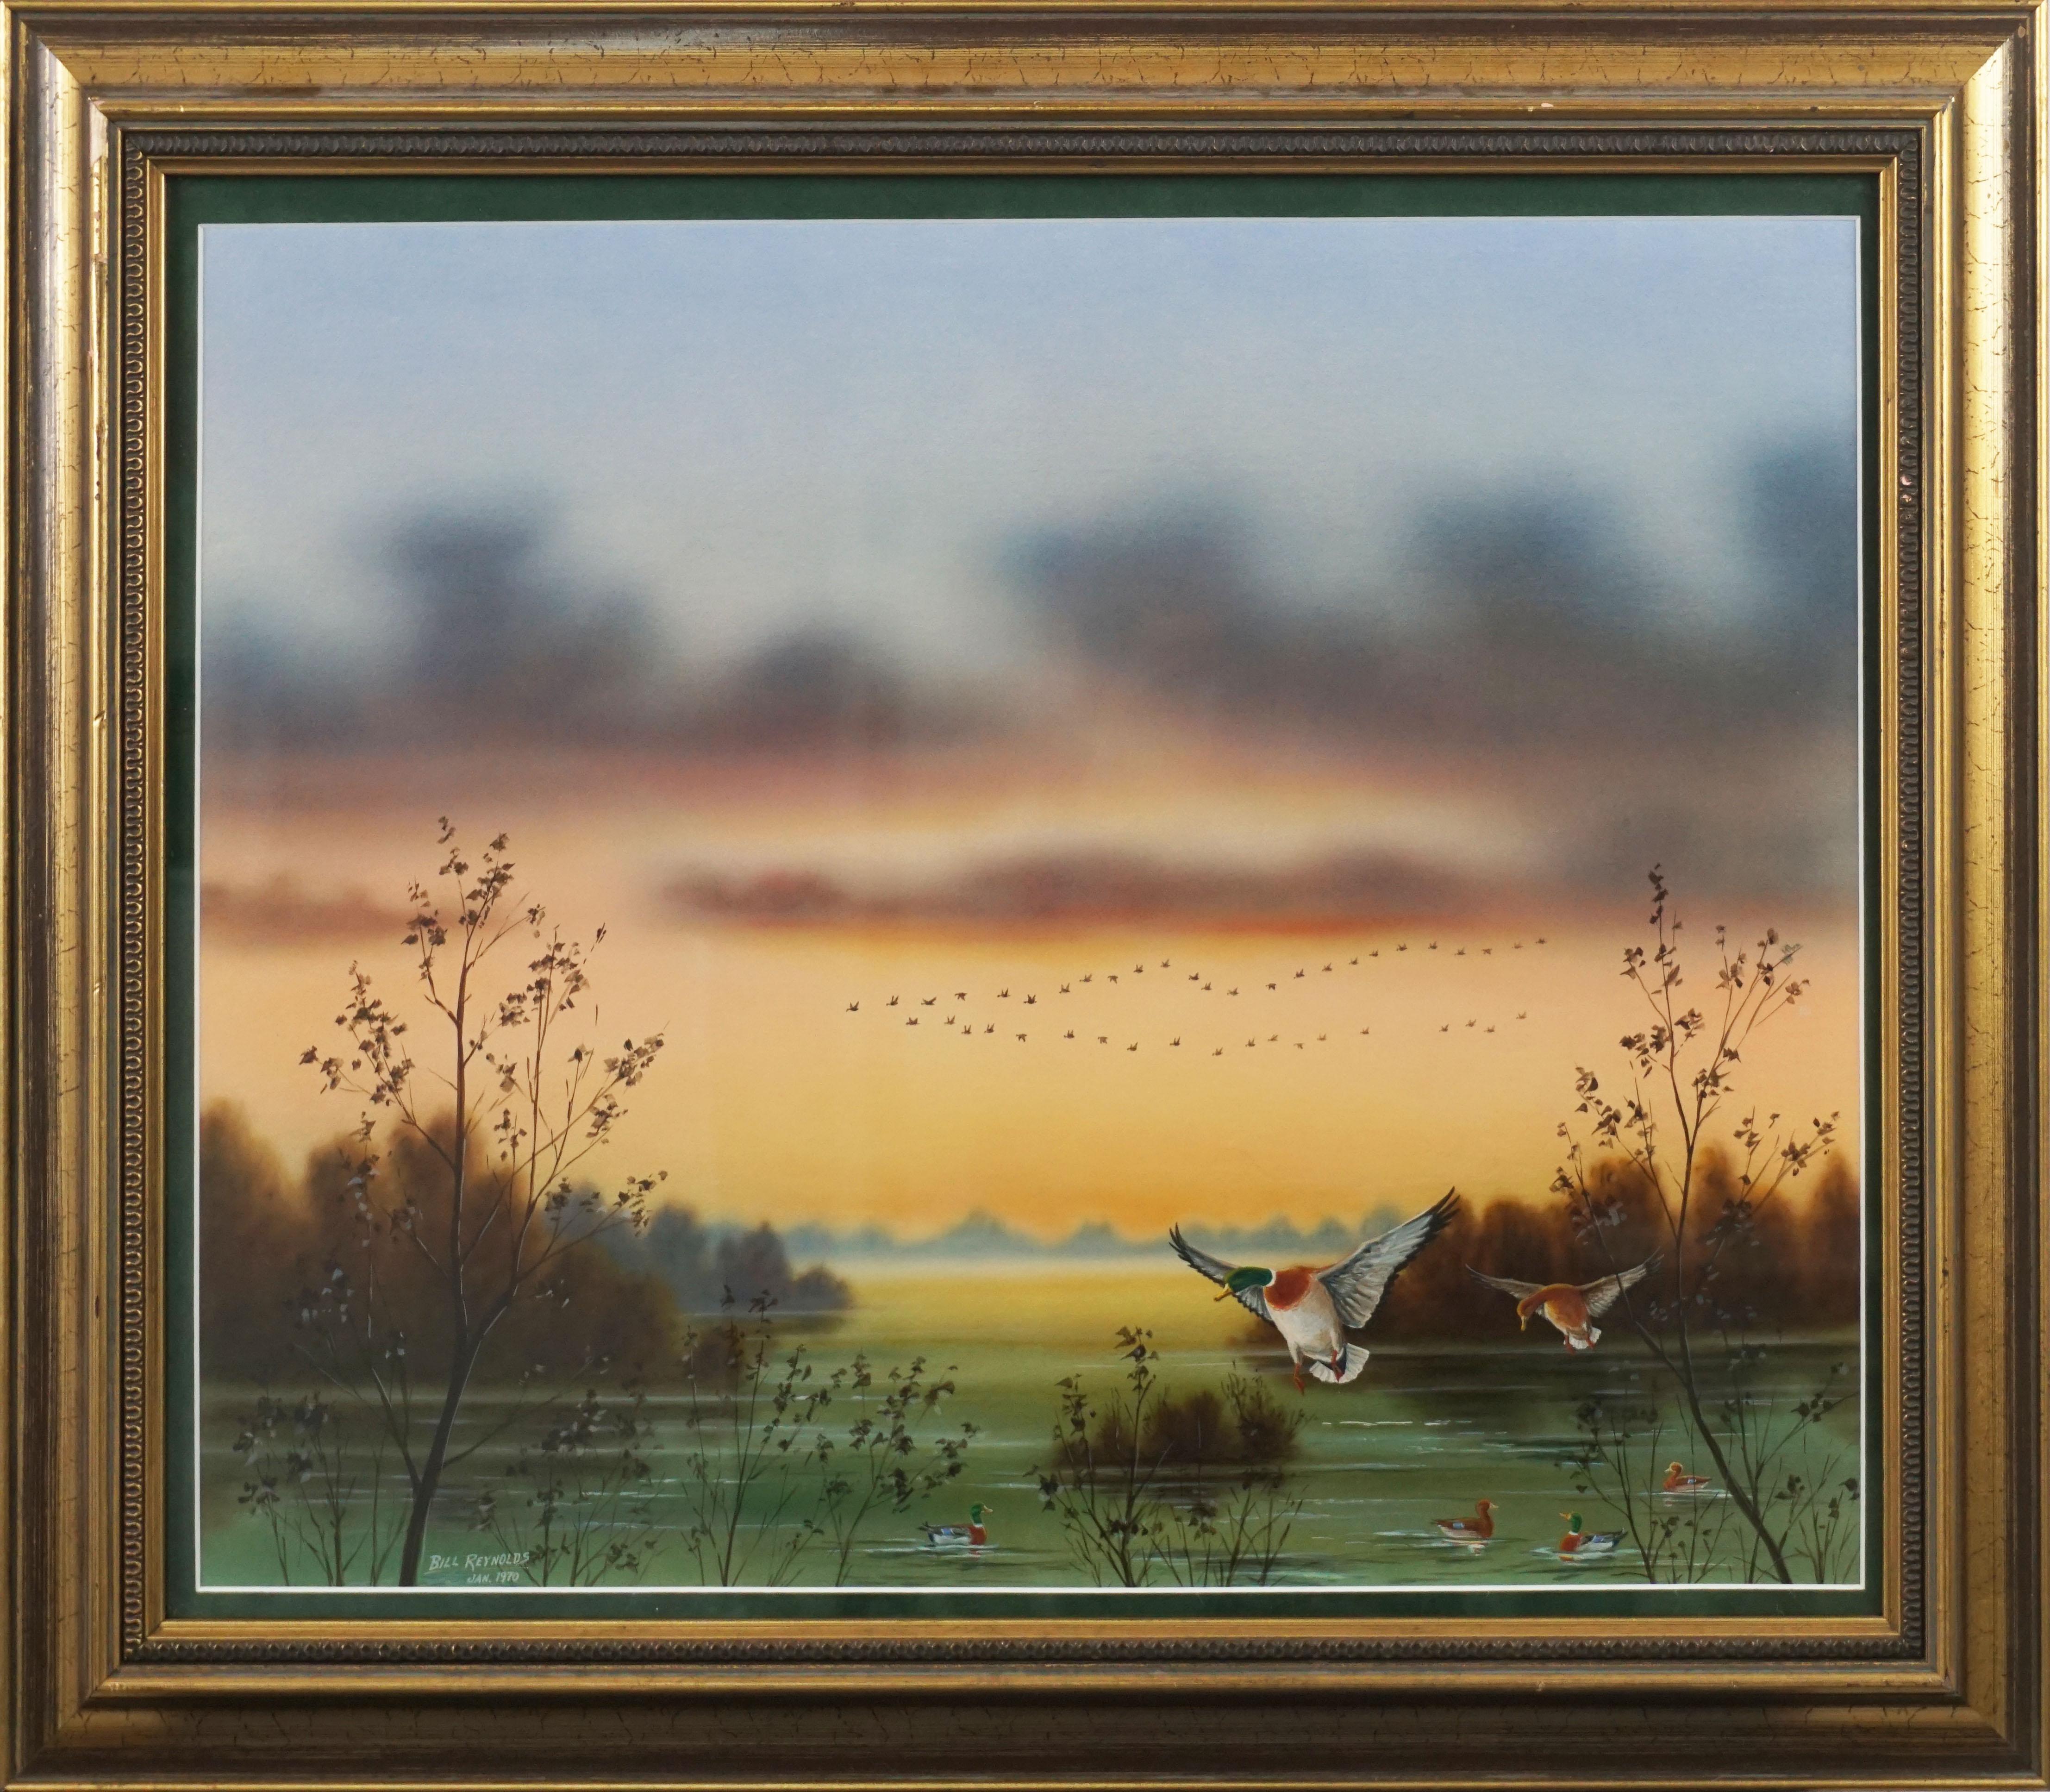 Bill Reynolds Landscape Painting – Breath of Dawn, 1970er Jahre Sonnenaufgang Seelandschaft 